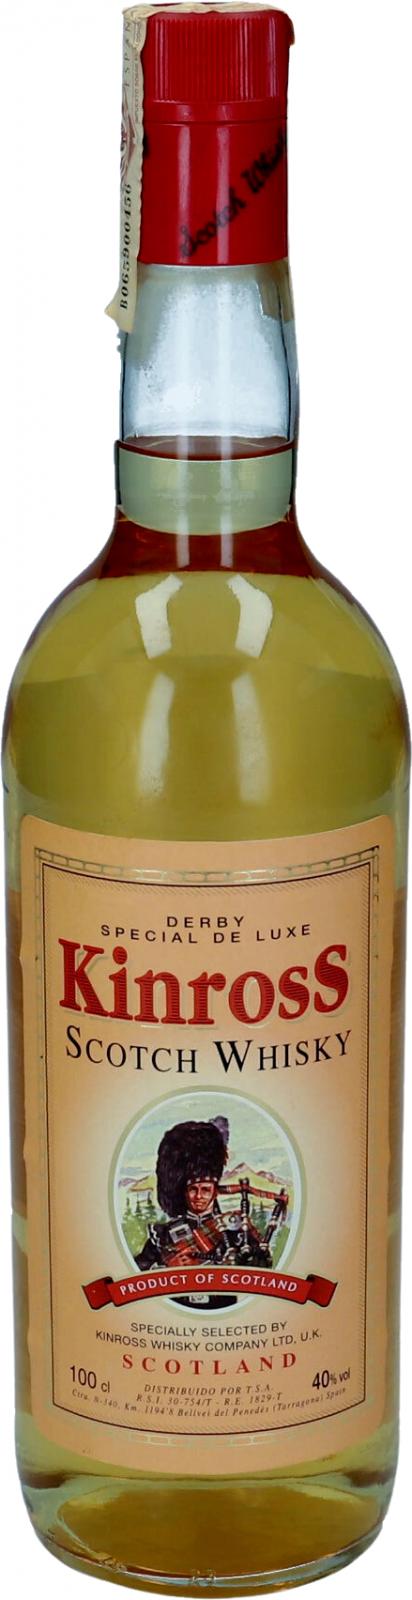 Kinross Derby Special De Luxe Scotch Whisky oak casks 40% 1000ml